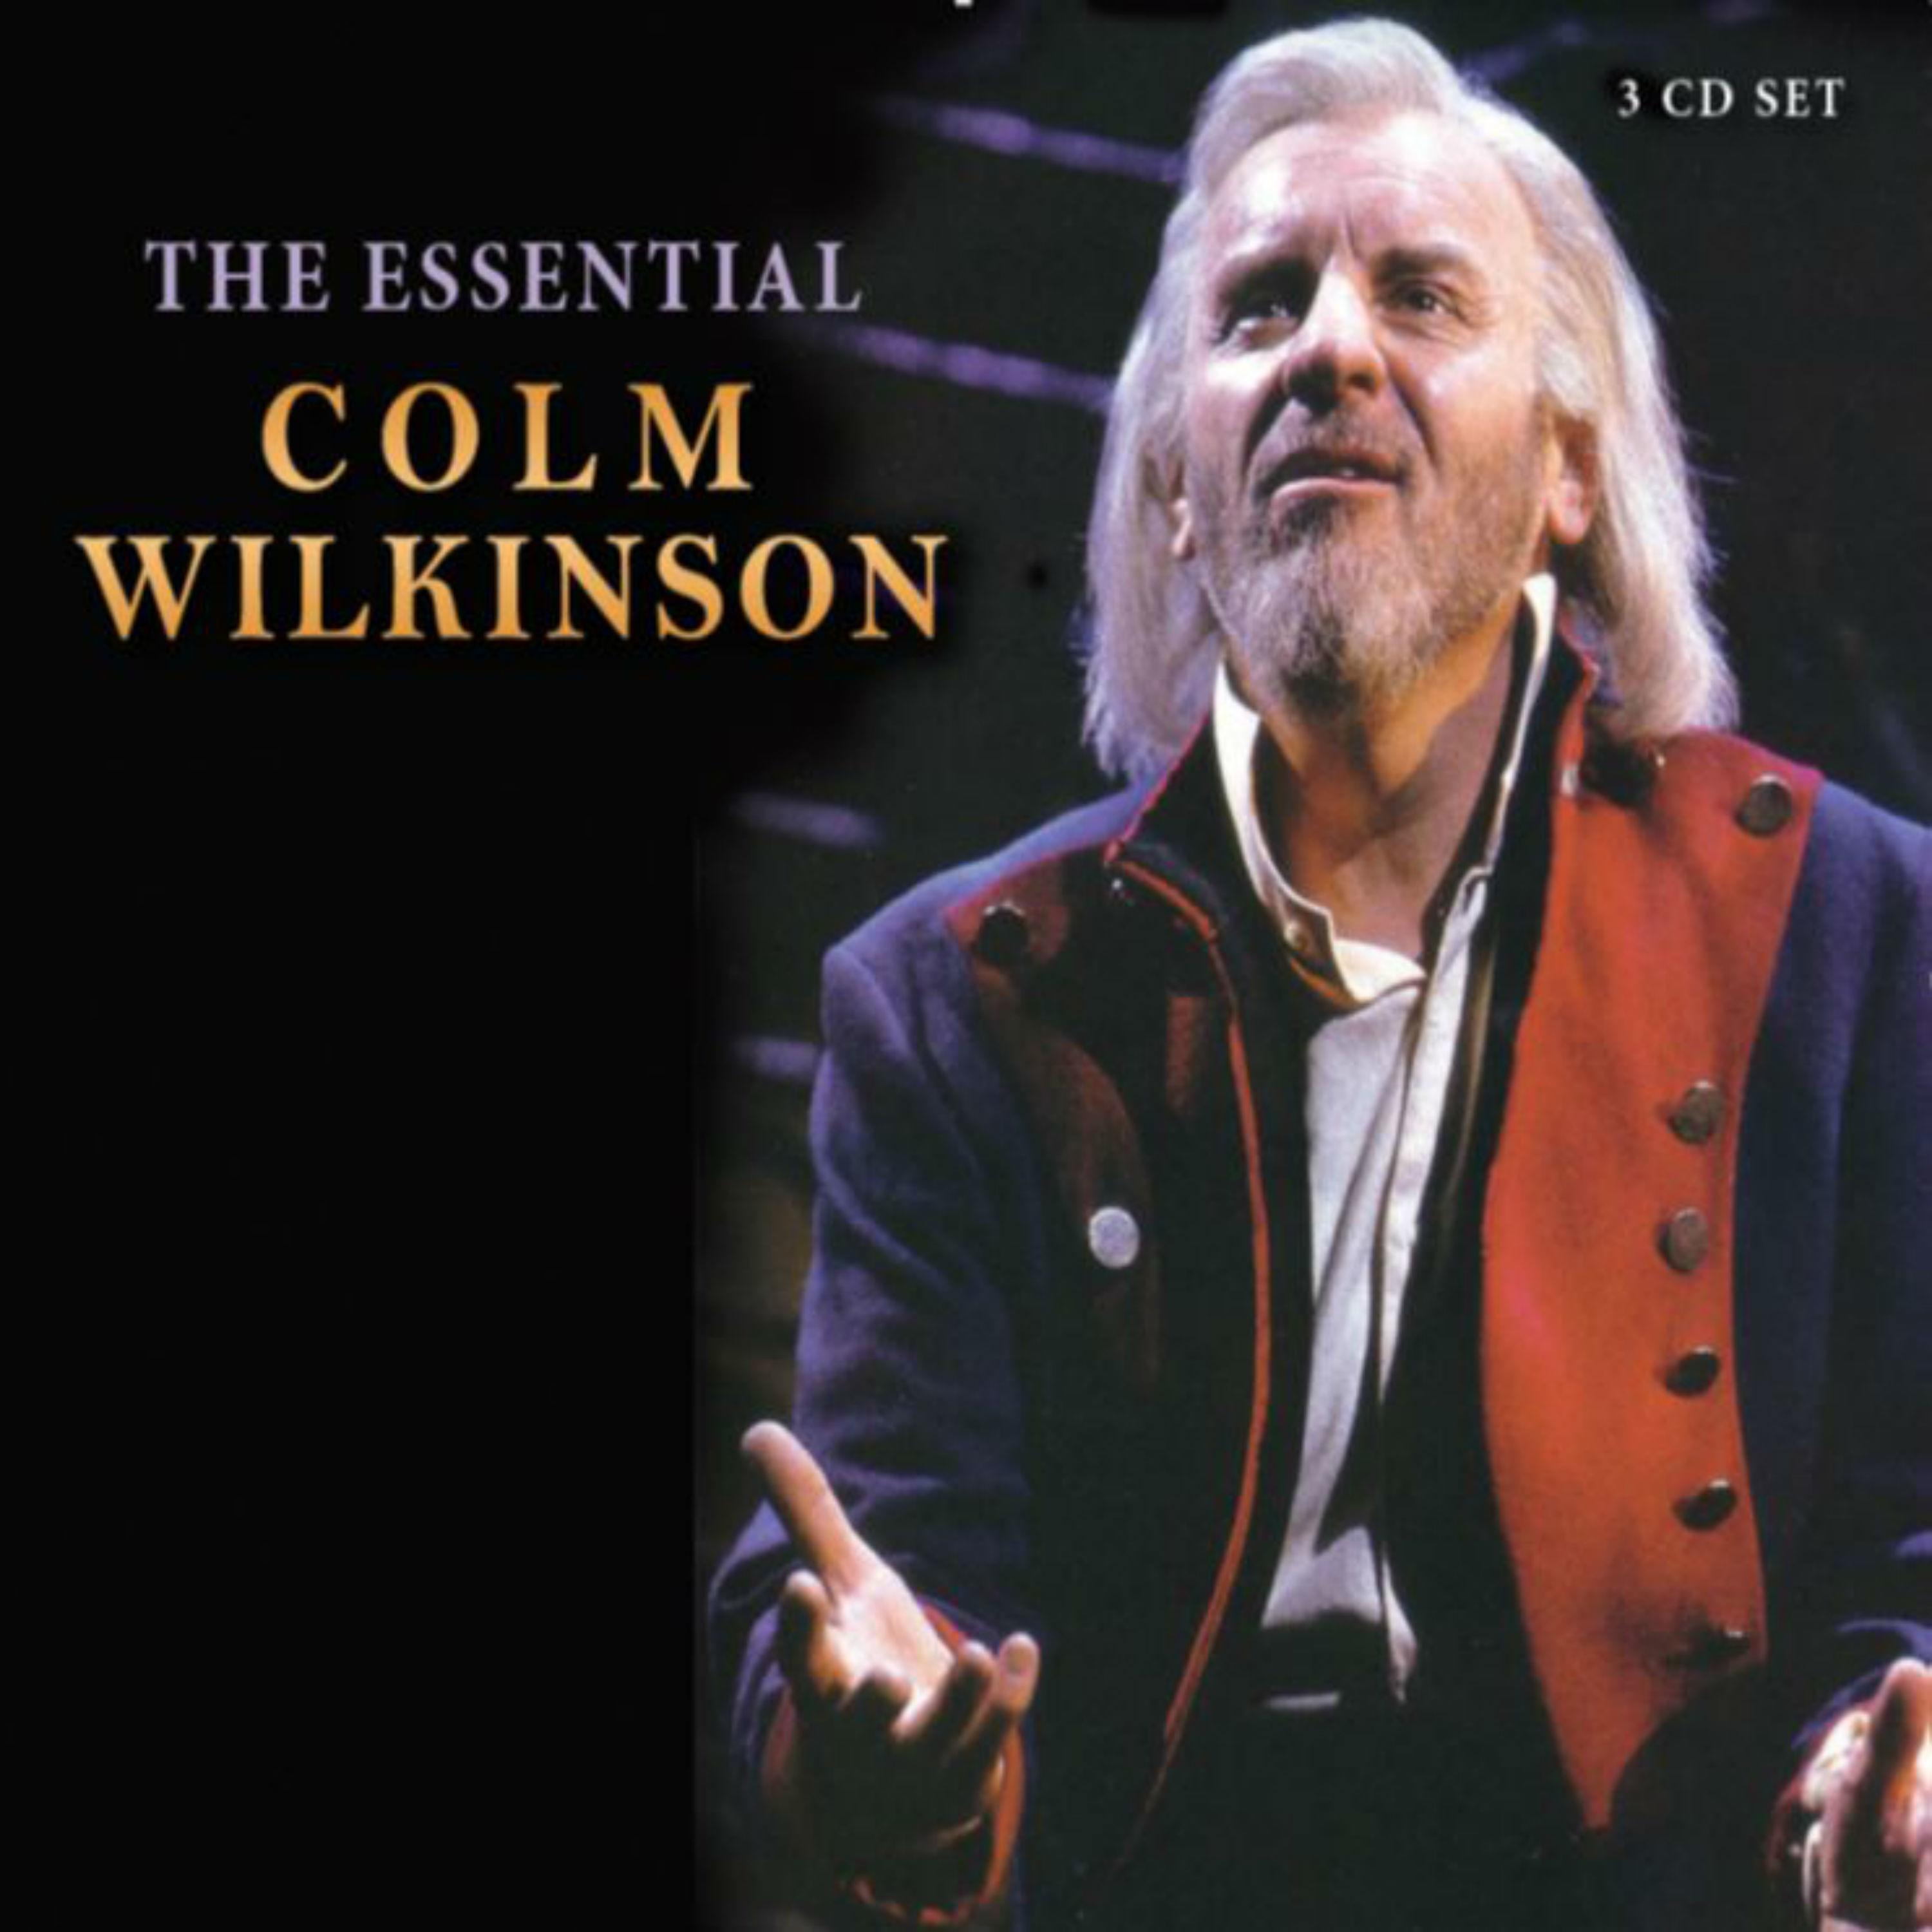 Colm Wilkinson - Old Man River